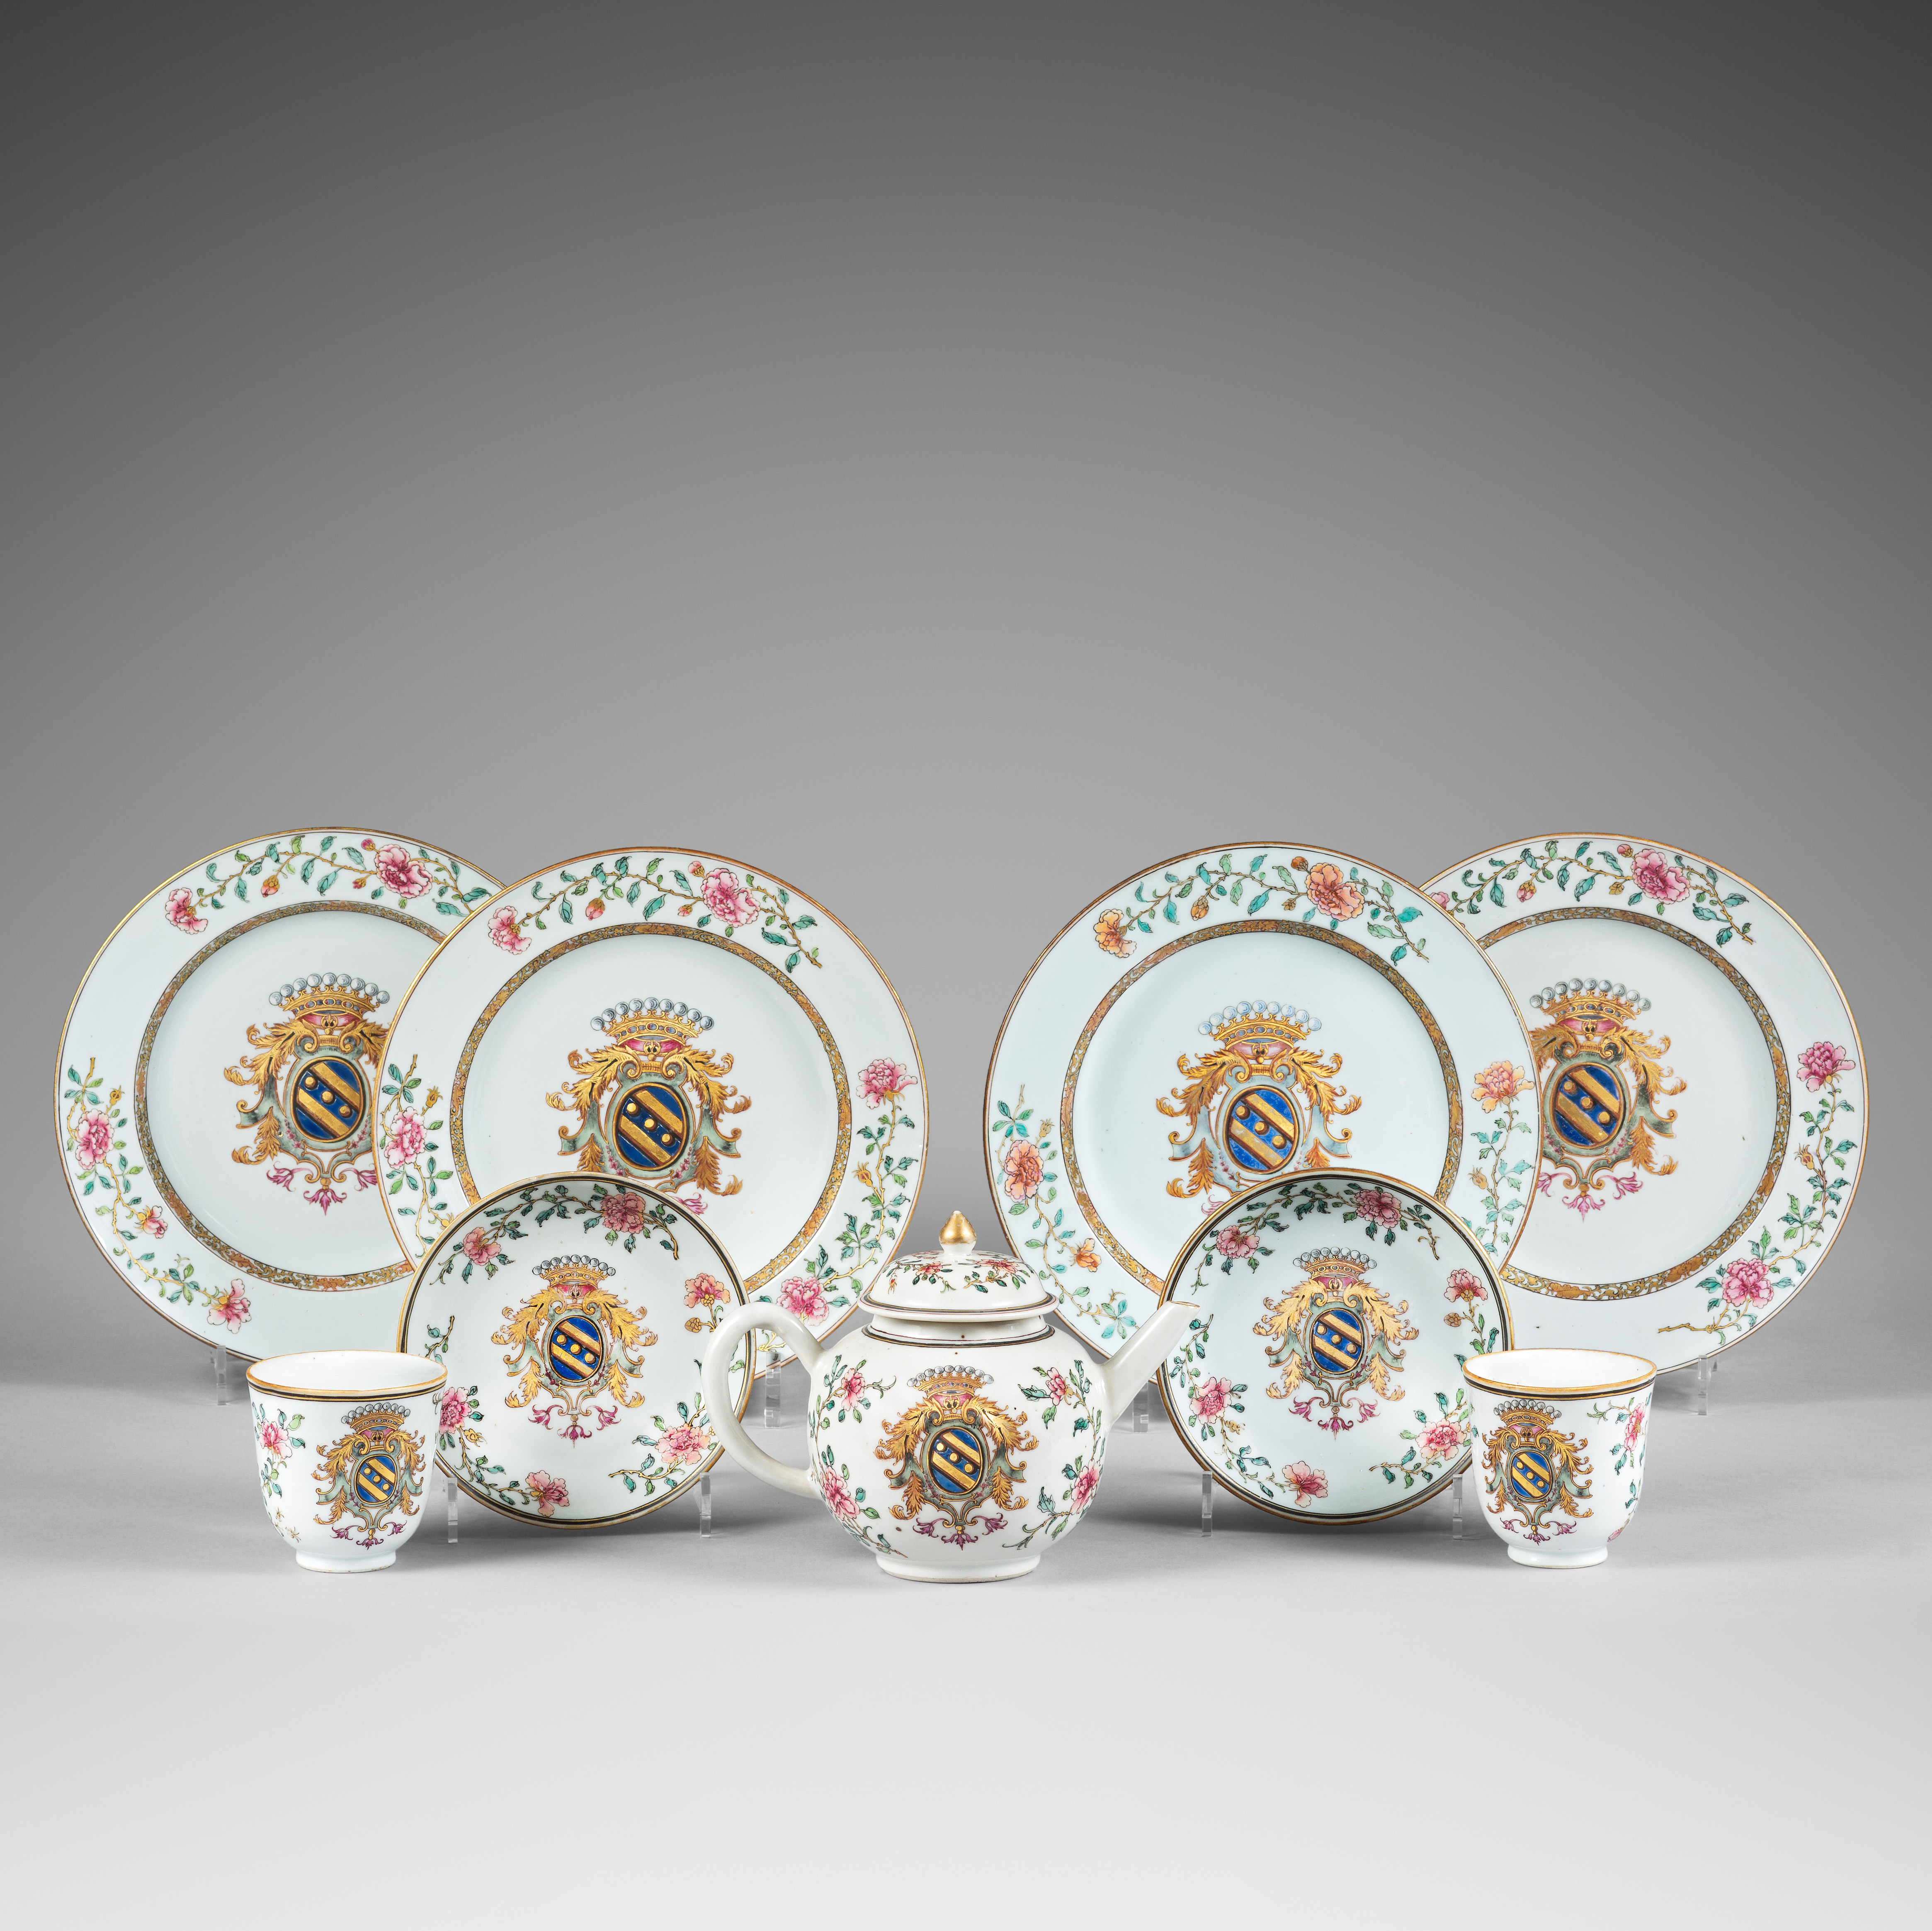 Porcelaine Époque Yongzheng (1723-1735), circa 1730, Chine